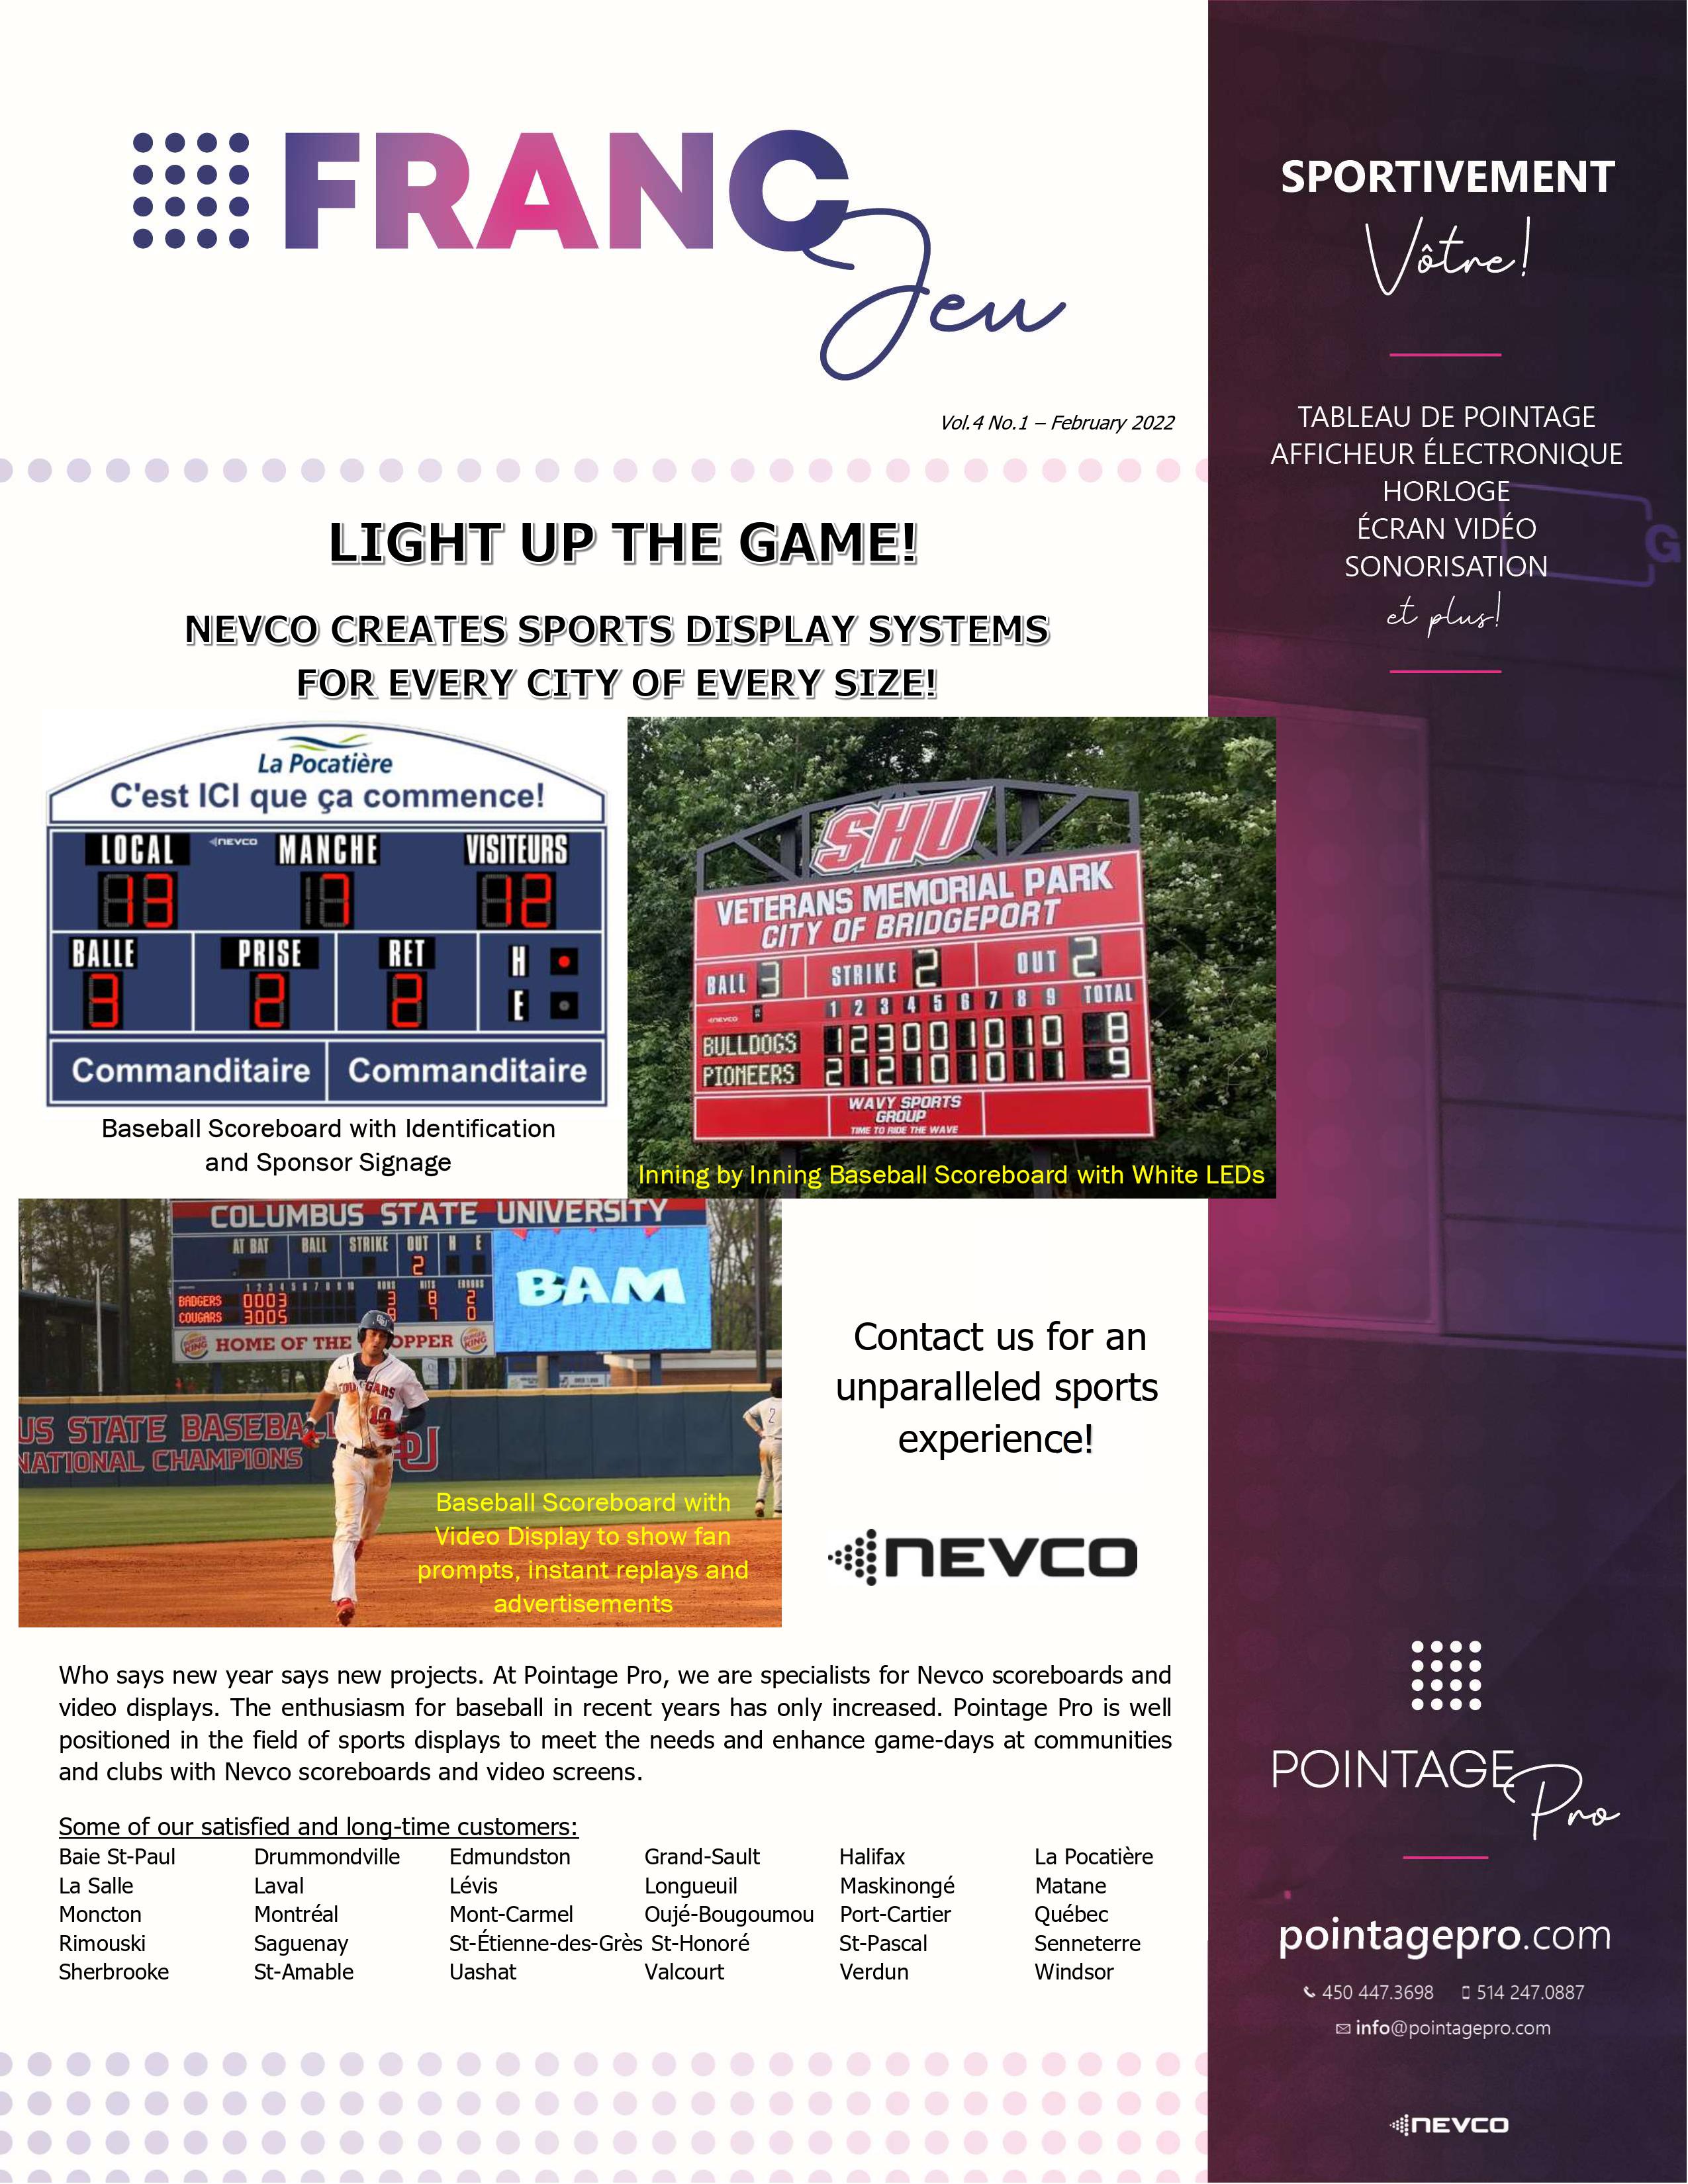 Nevco Baseball scoreboard and Video displays 